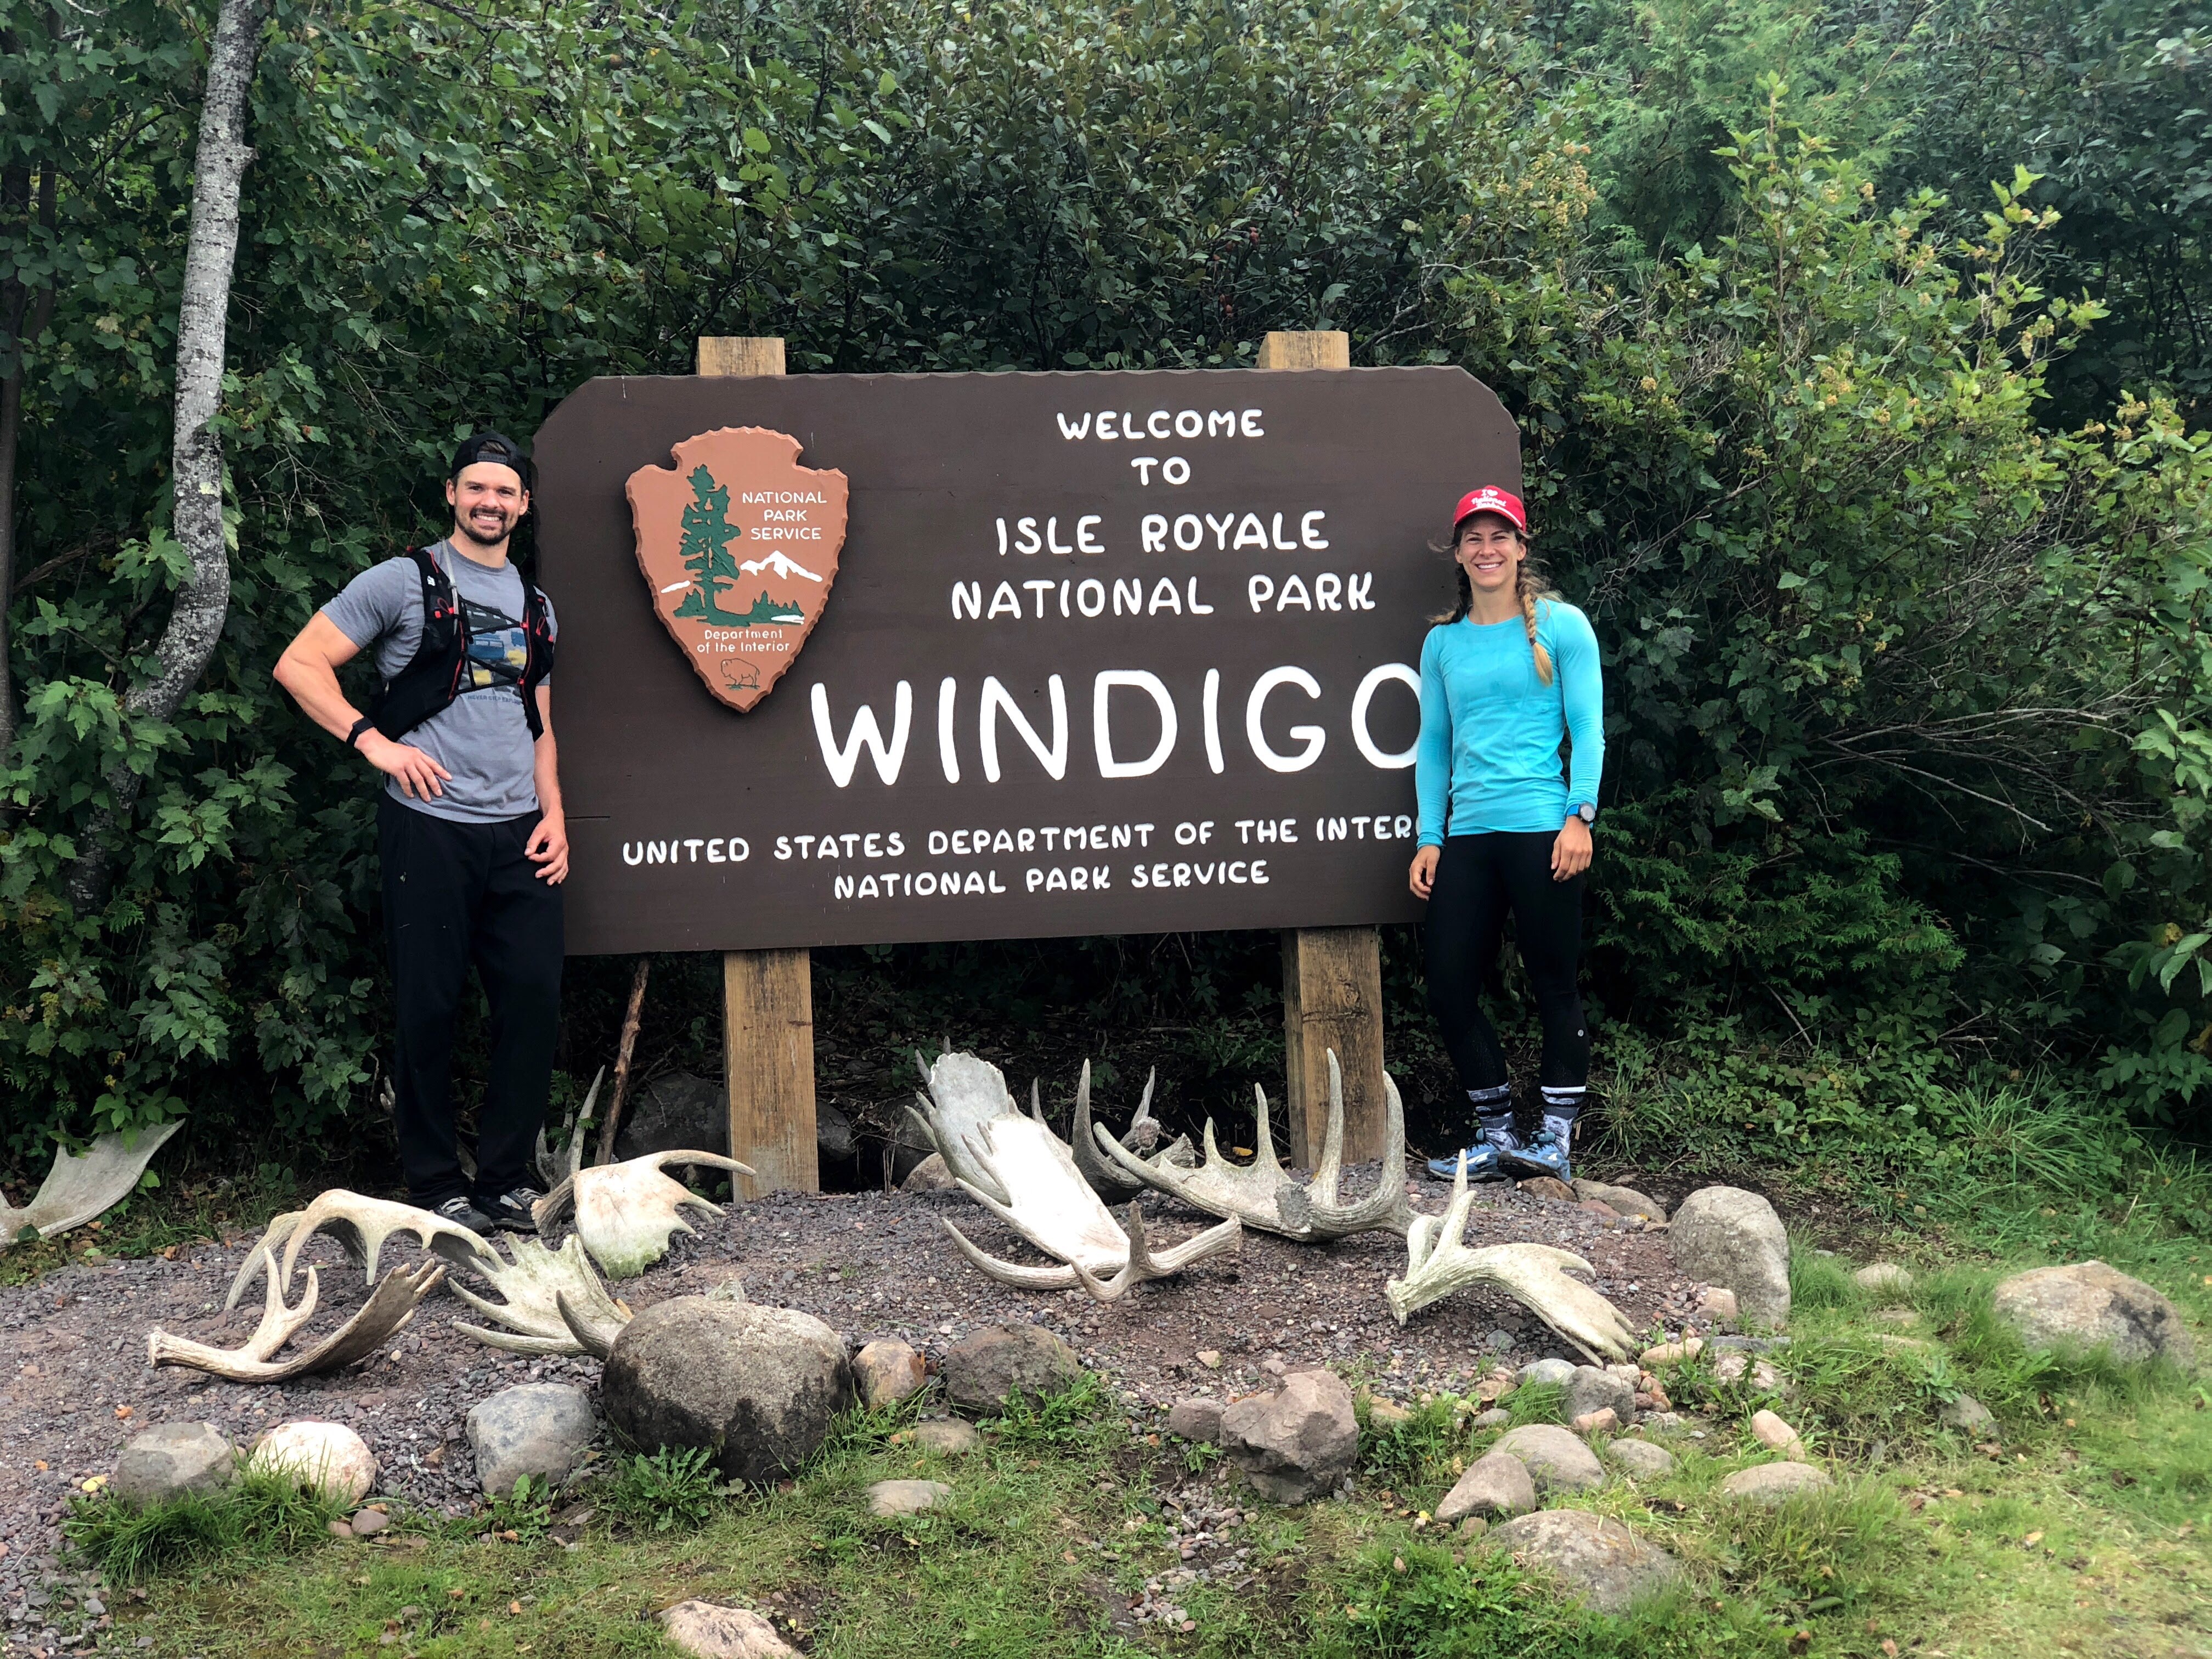 Joe and Emily in Windigo in Isle Royale National Park